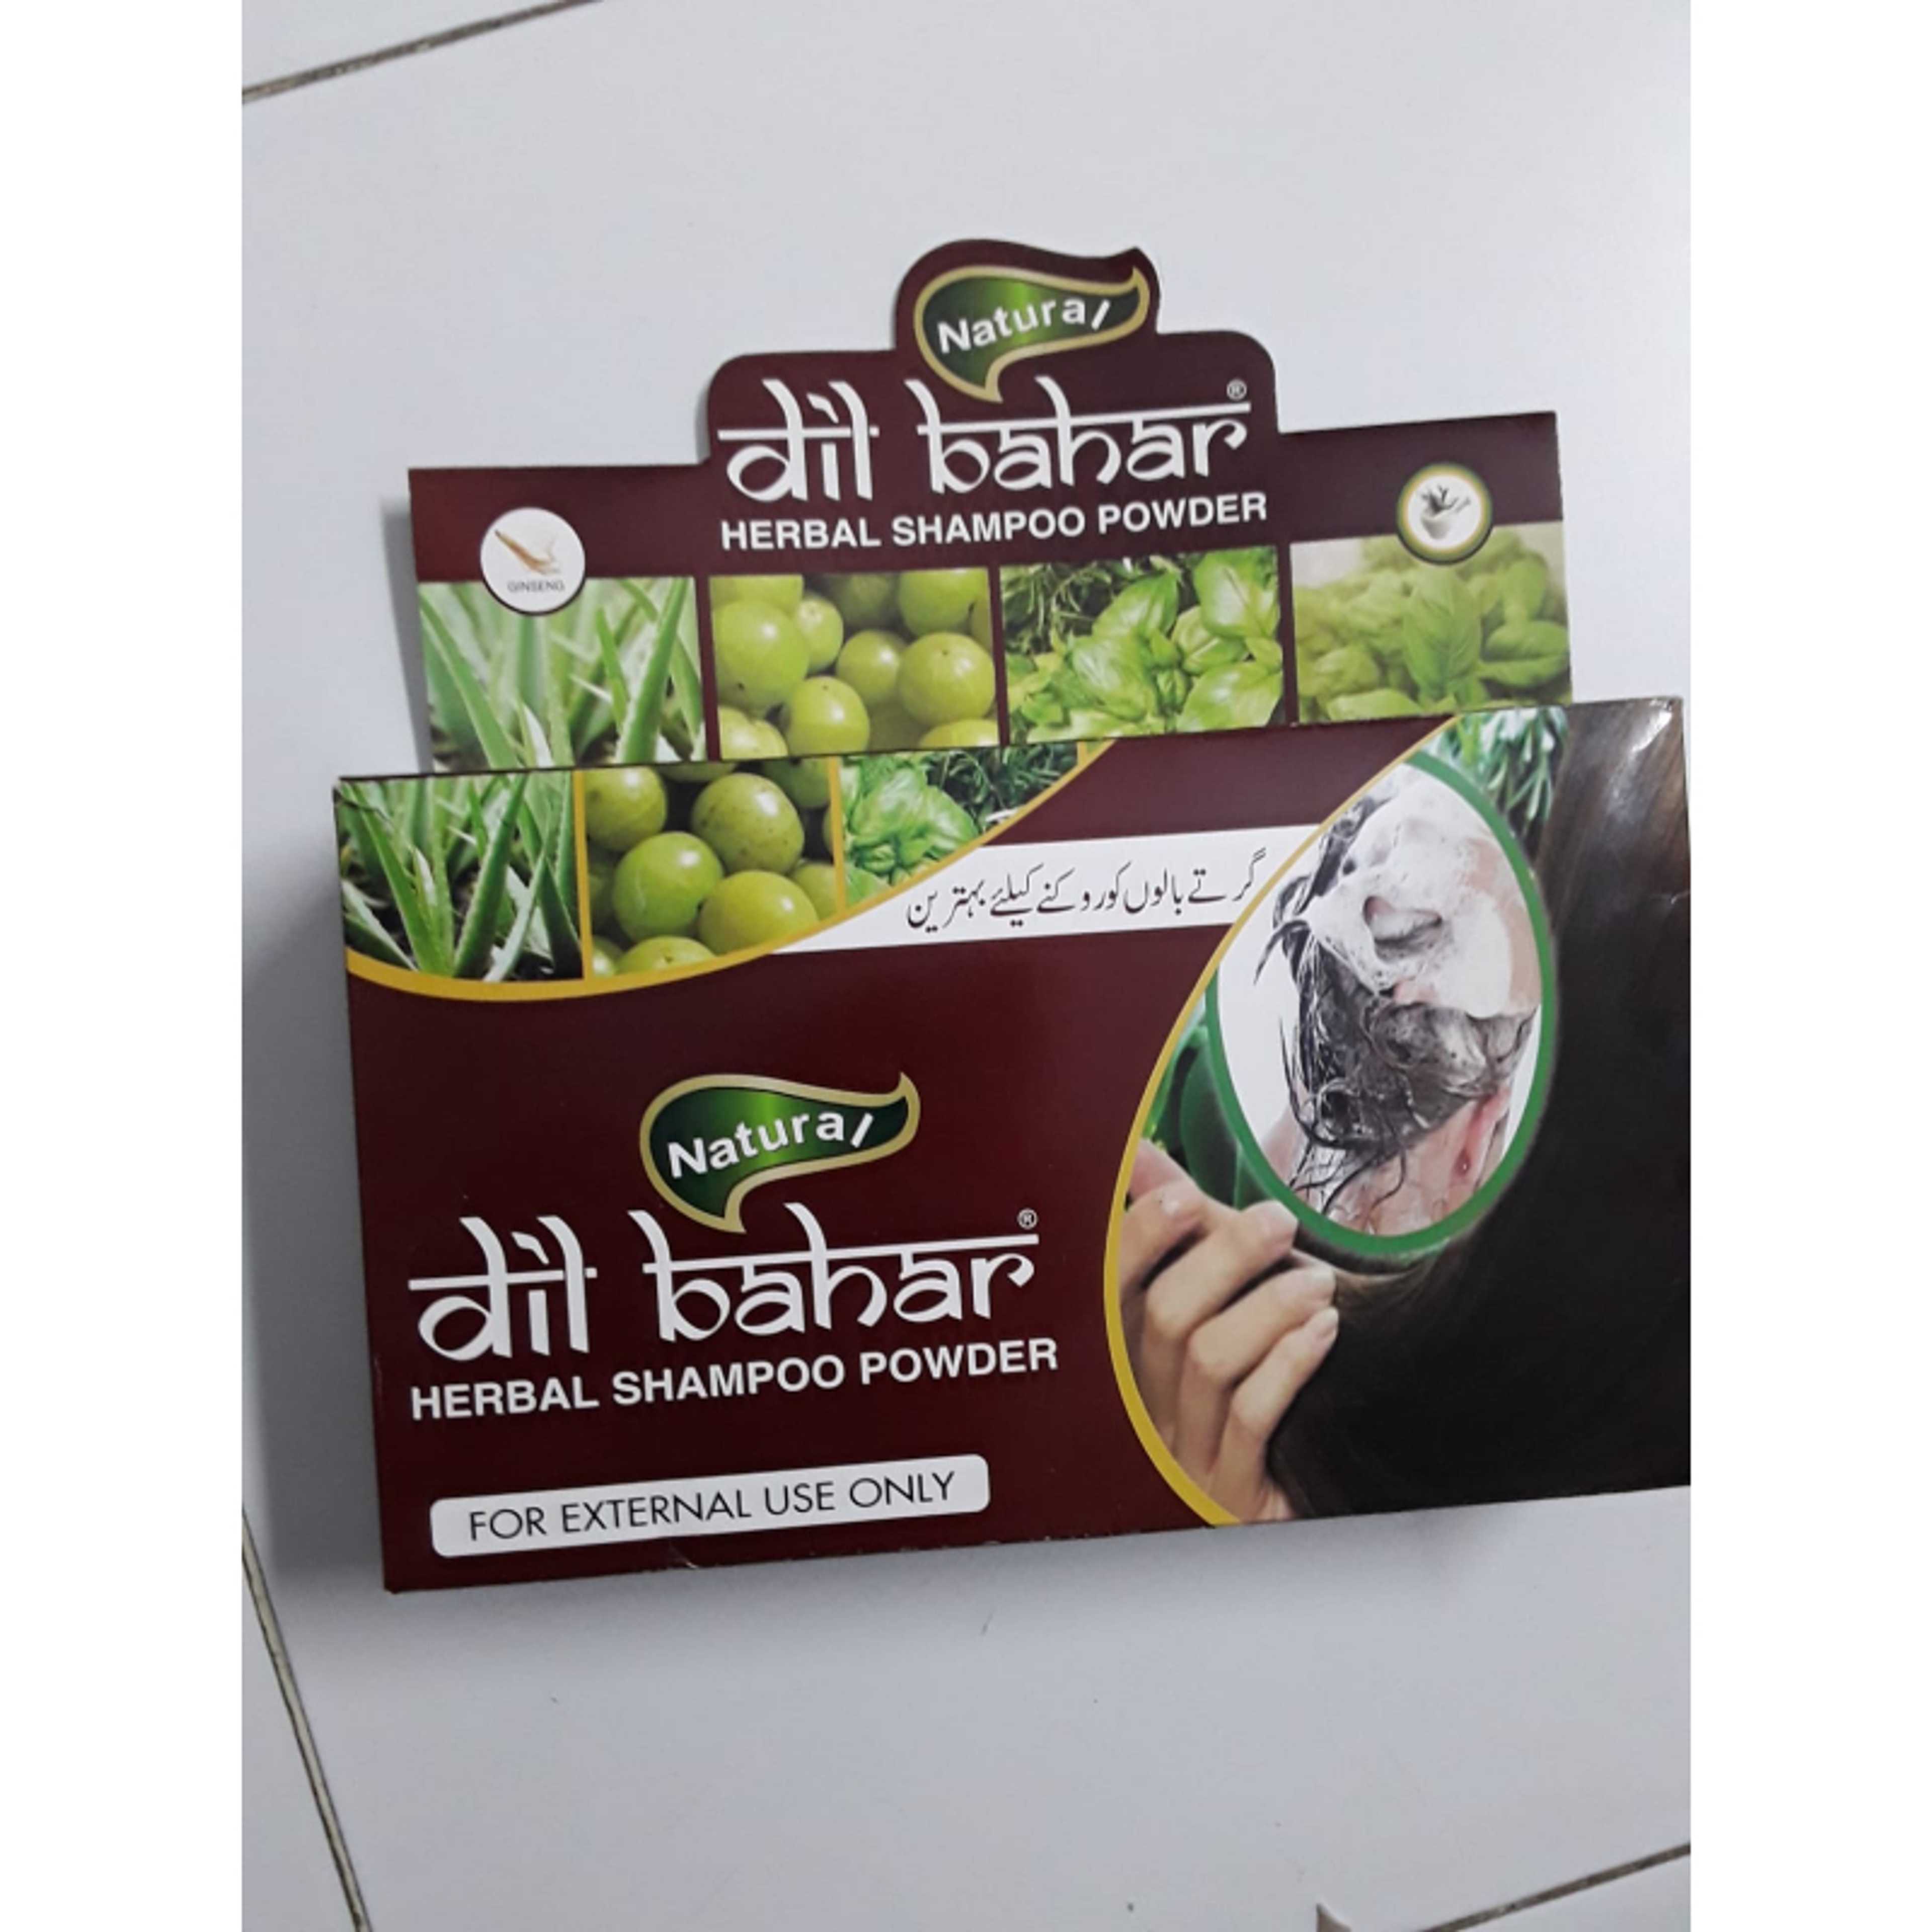 Dil Bahaar Herbal Shampoo Powder